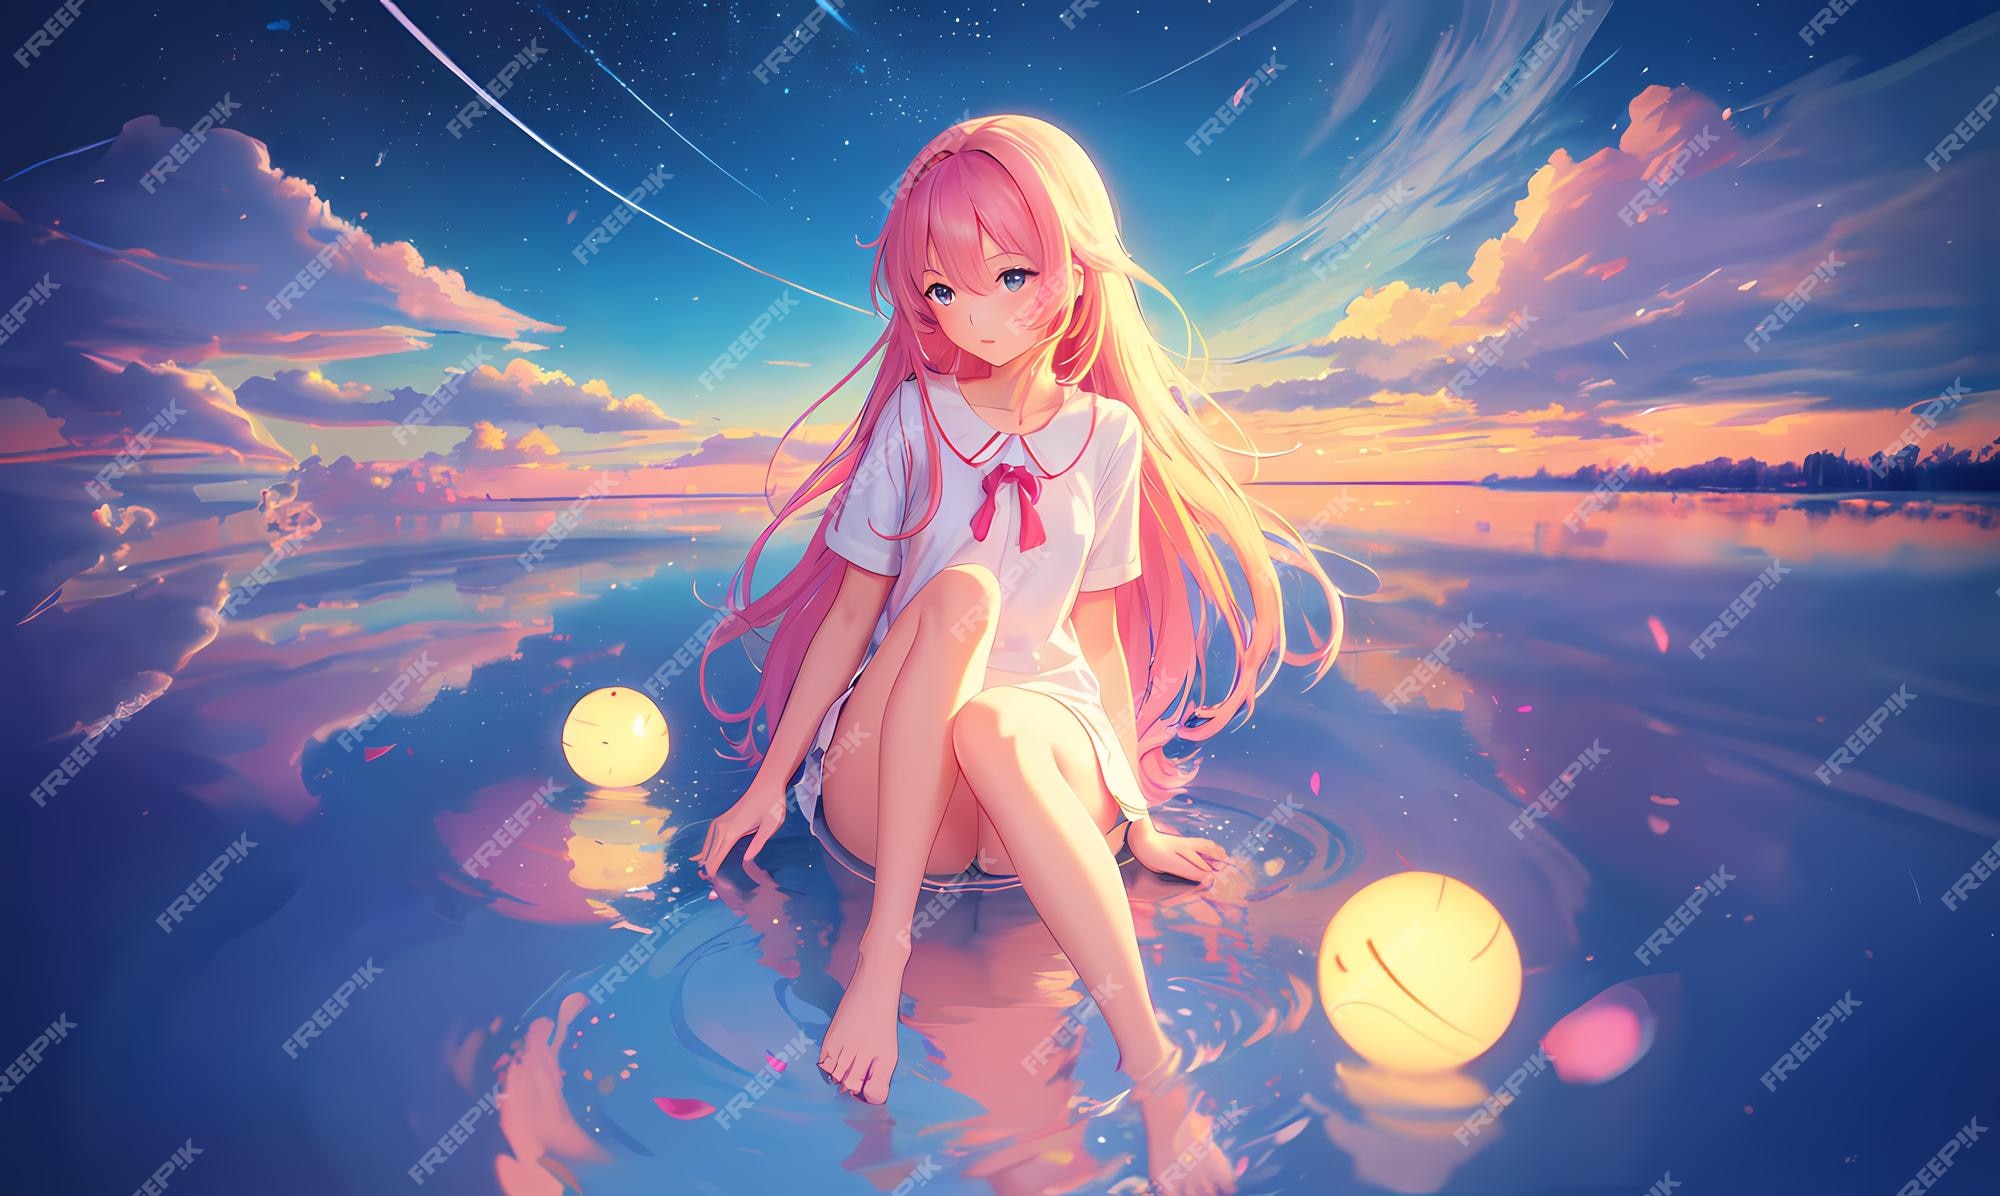 Premium AI Image | Azure lake illustration anime girl